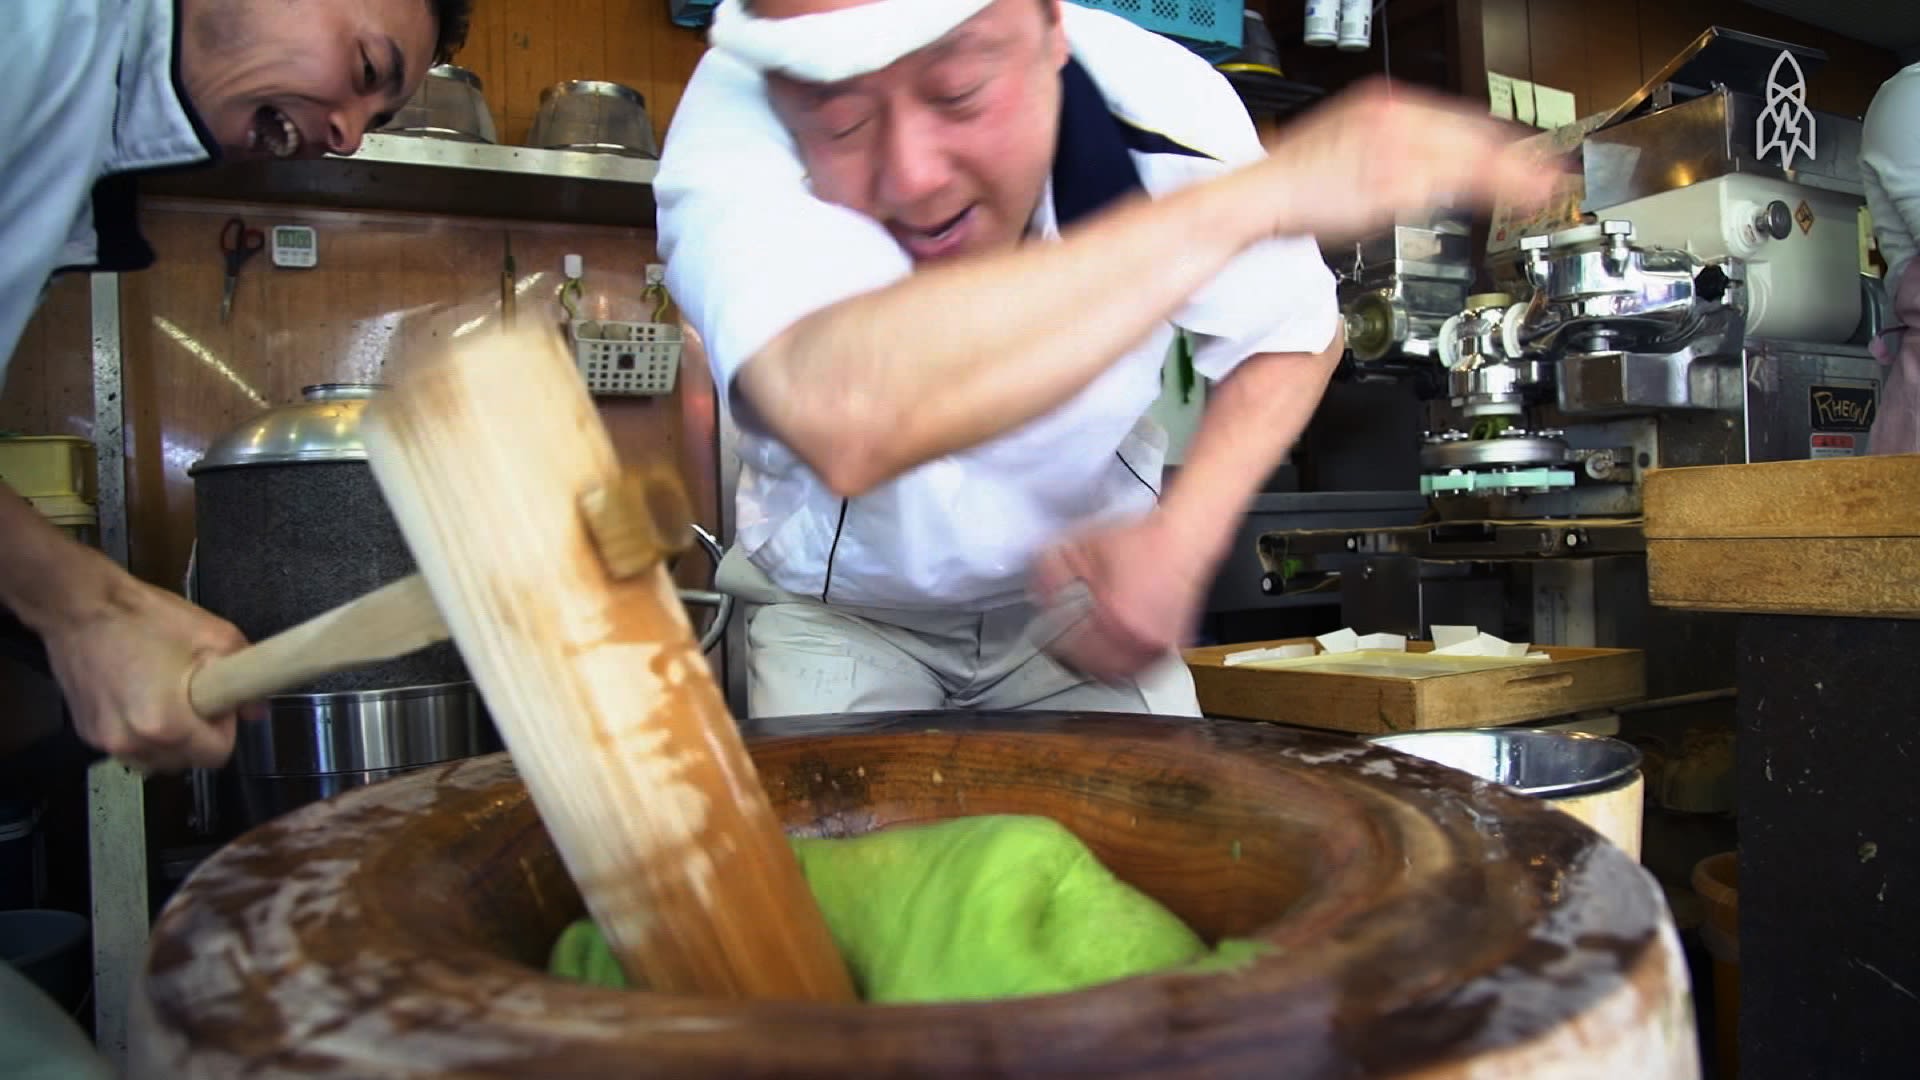 Fastest mochi maker in Japan